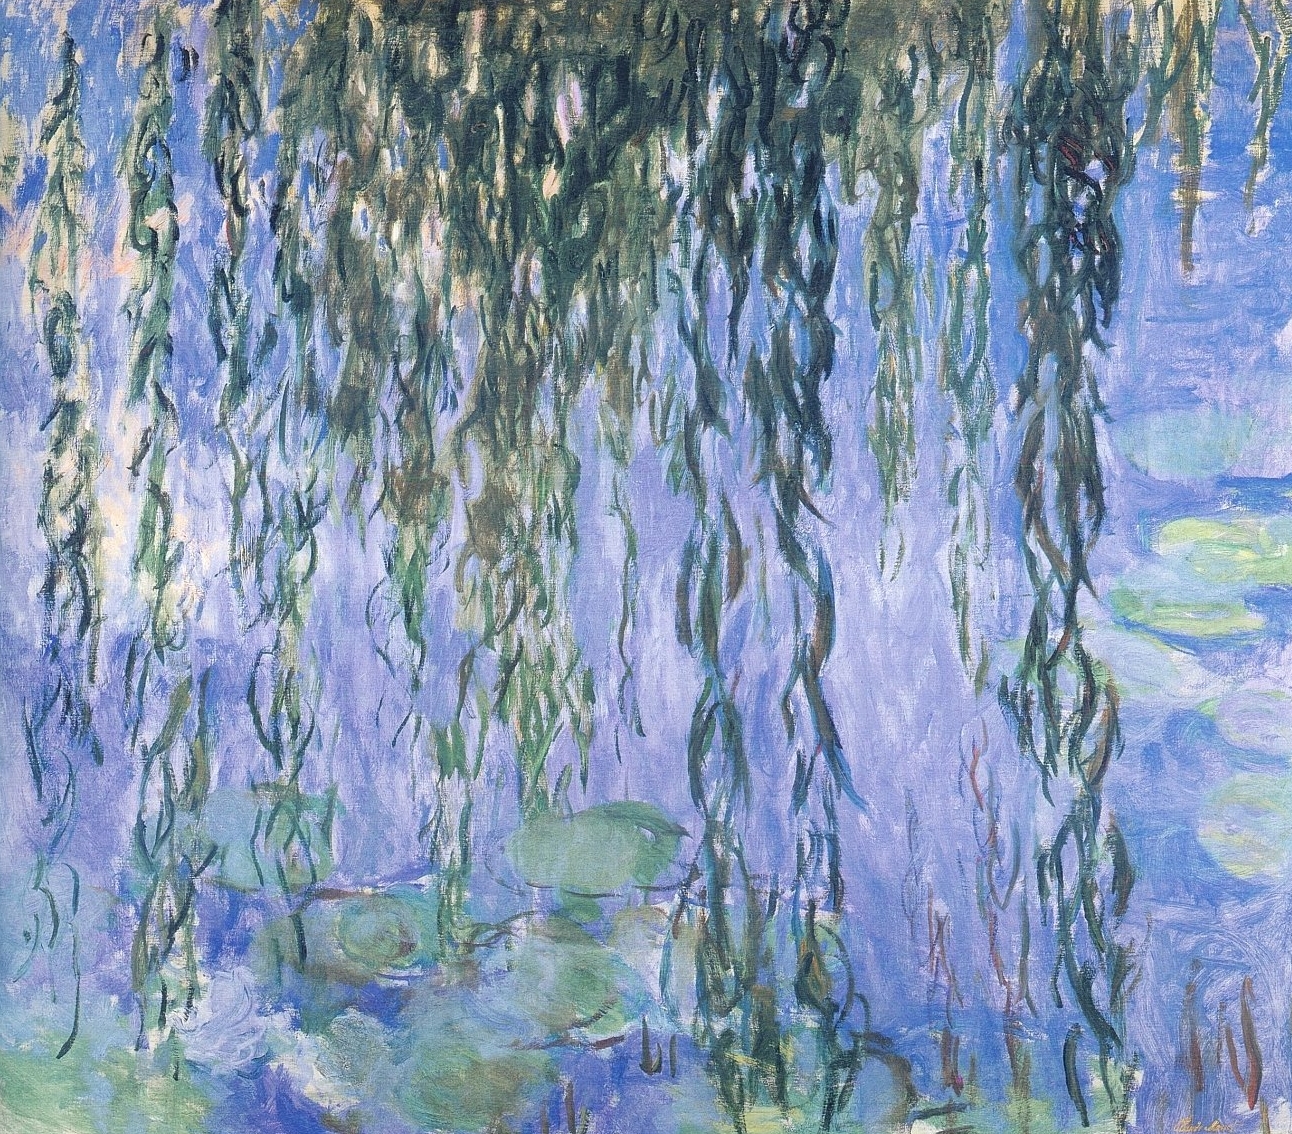 Claude+Monet-1840-1926 (932).jpg